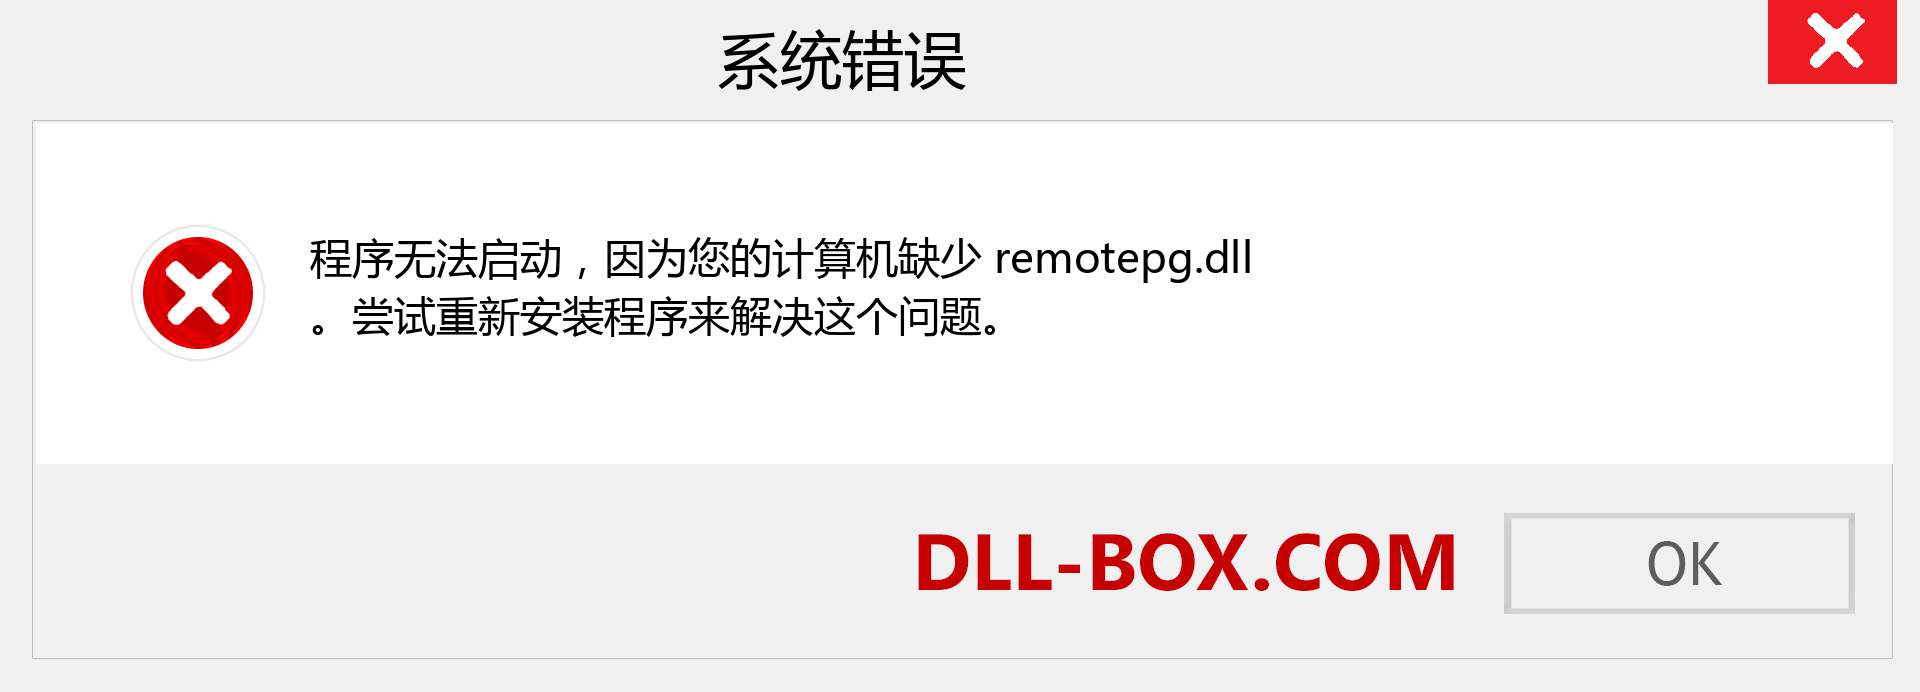 remotepg.dll 文件丢失？。 适用于 Windows 7、8、10 的下载 - 修复 Windows、照片、图像上的 remotepg dll 丢失错误